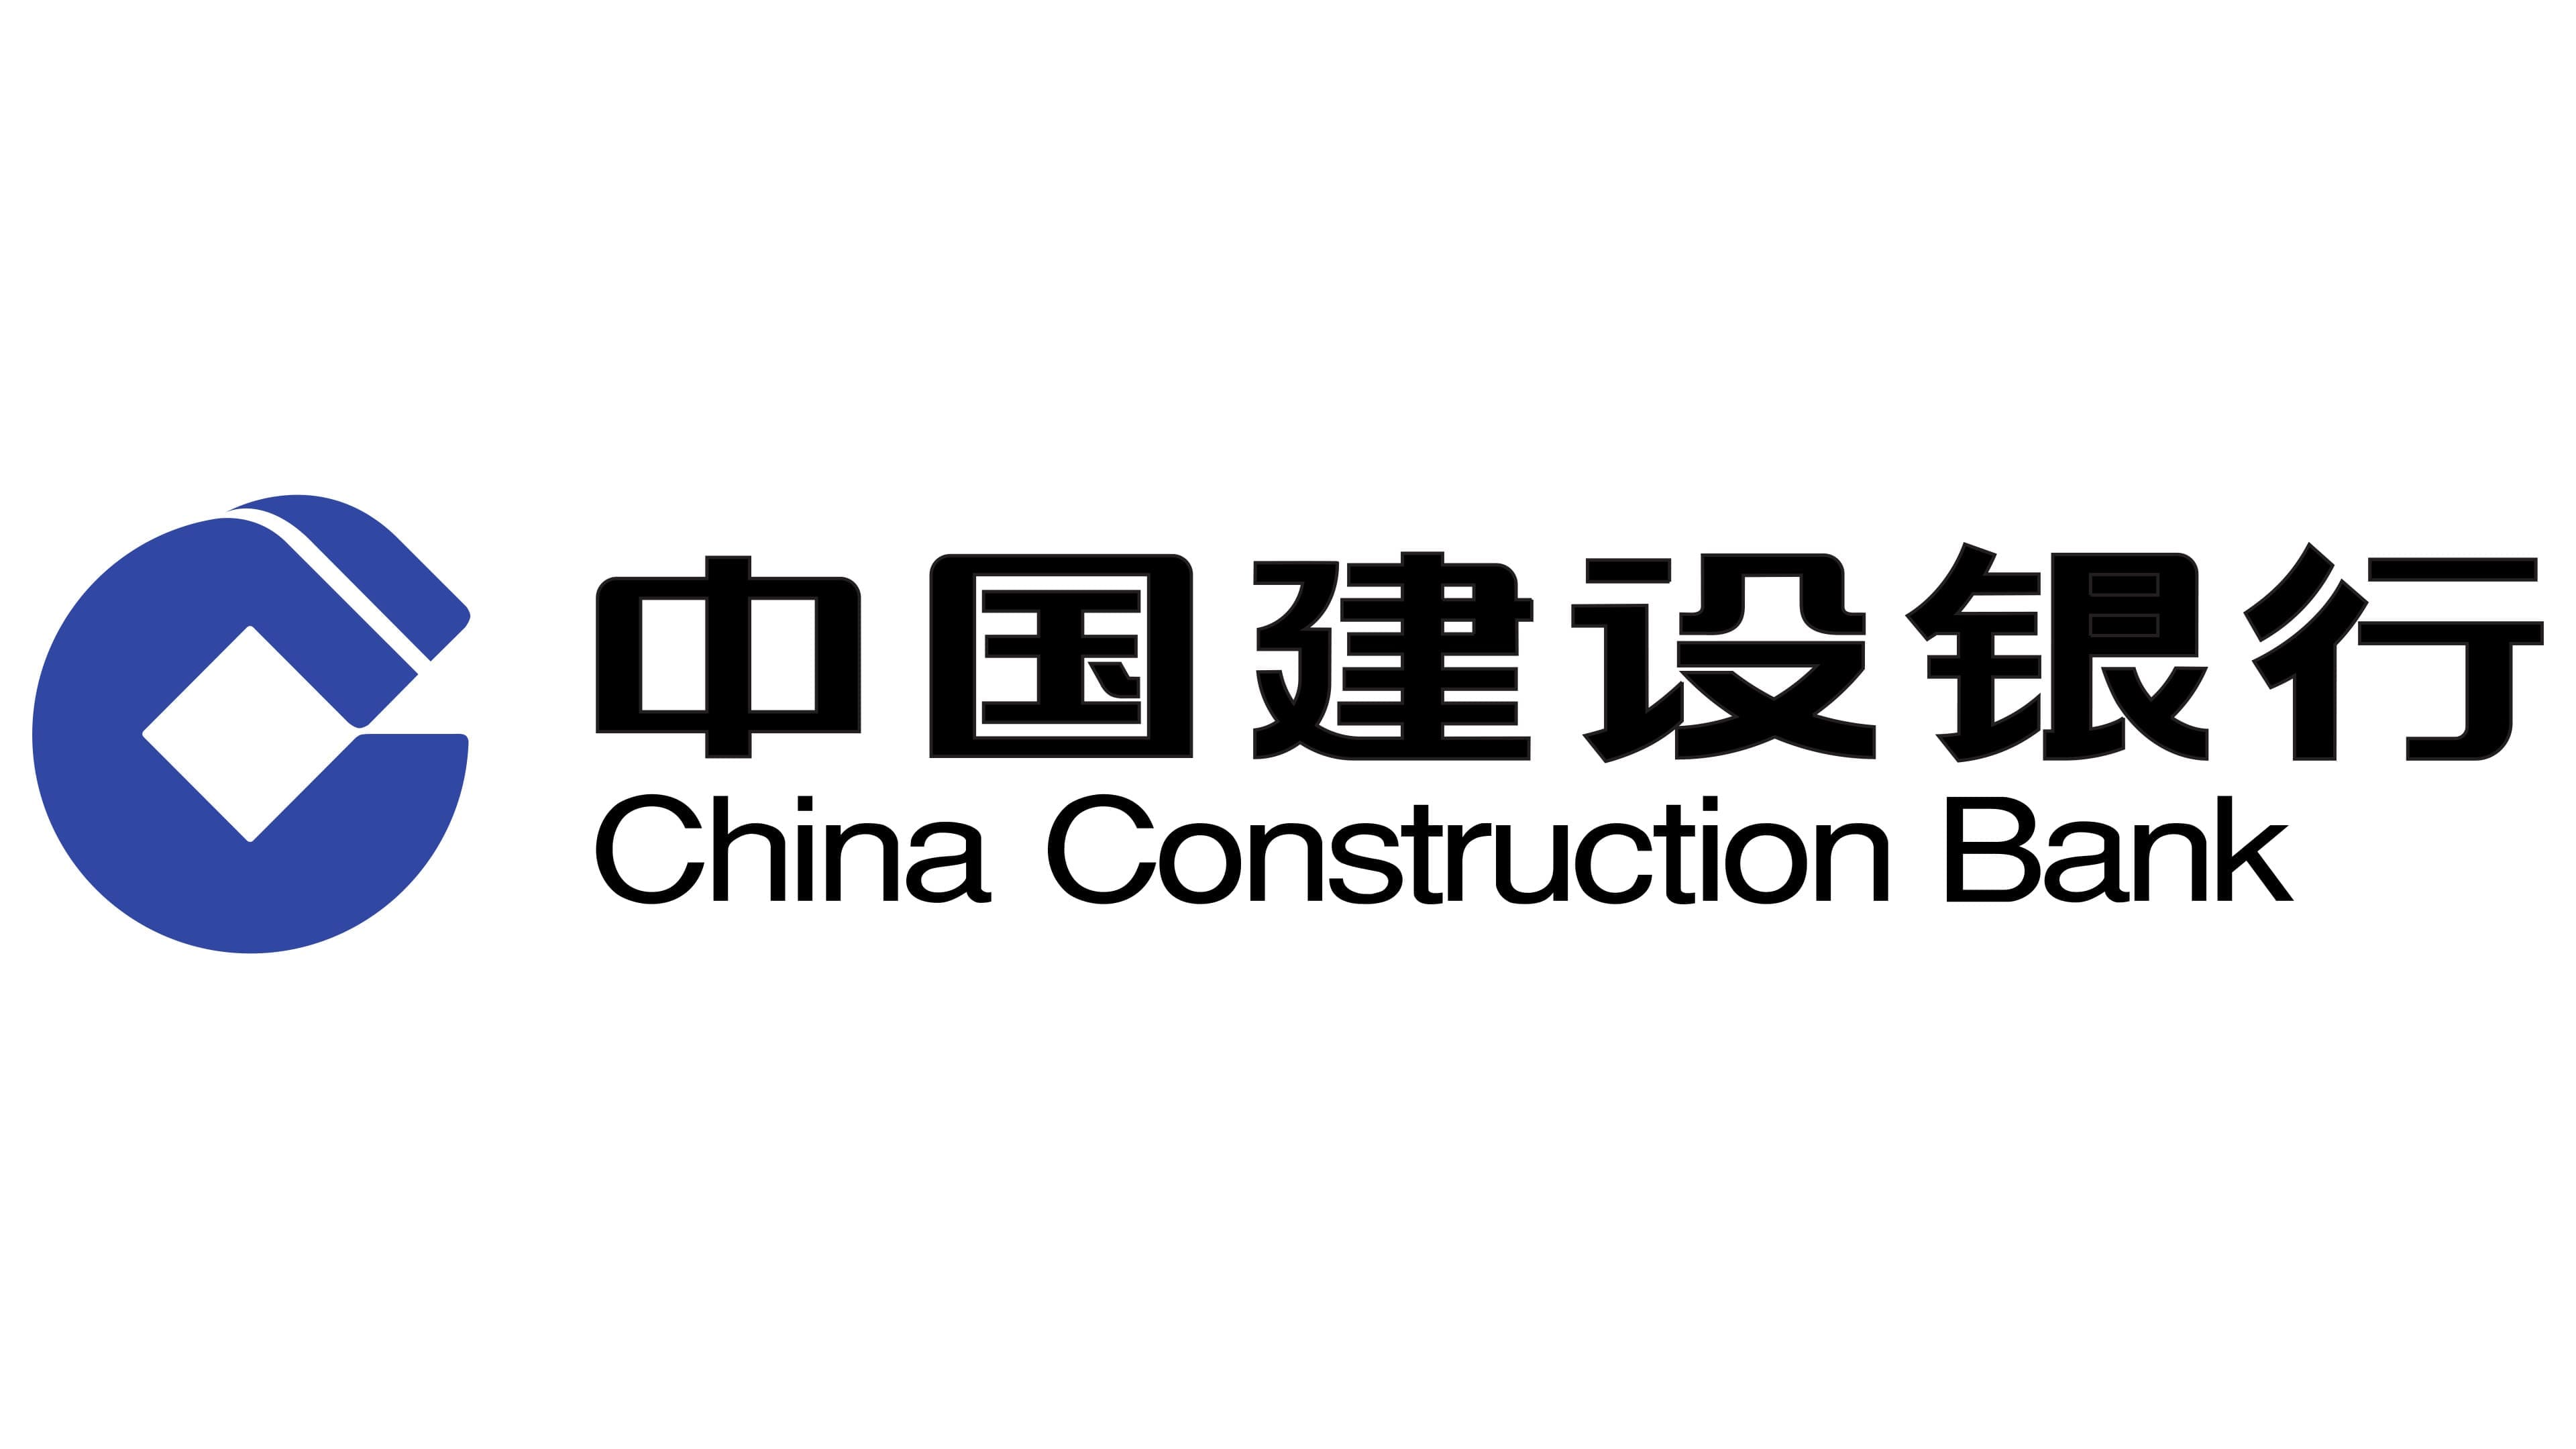 Cnaps bank of china. China Construction Bank Corporation. China Construction Bank logo. Строительного банка Китая. Строительный банк (CCB).